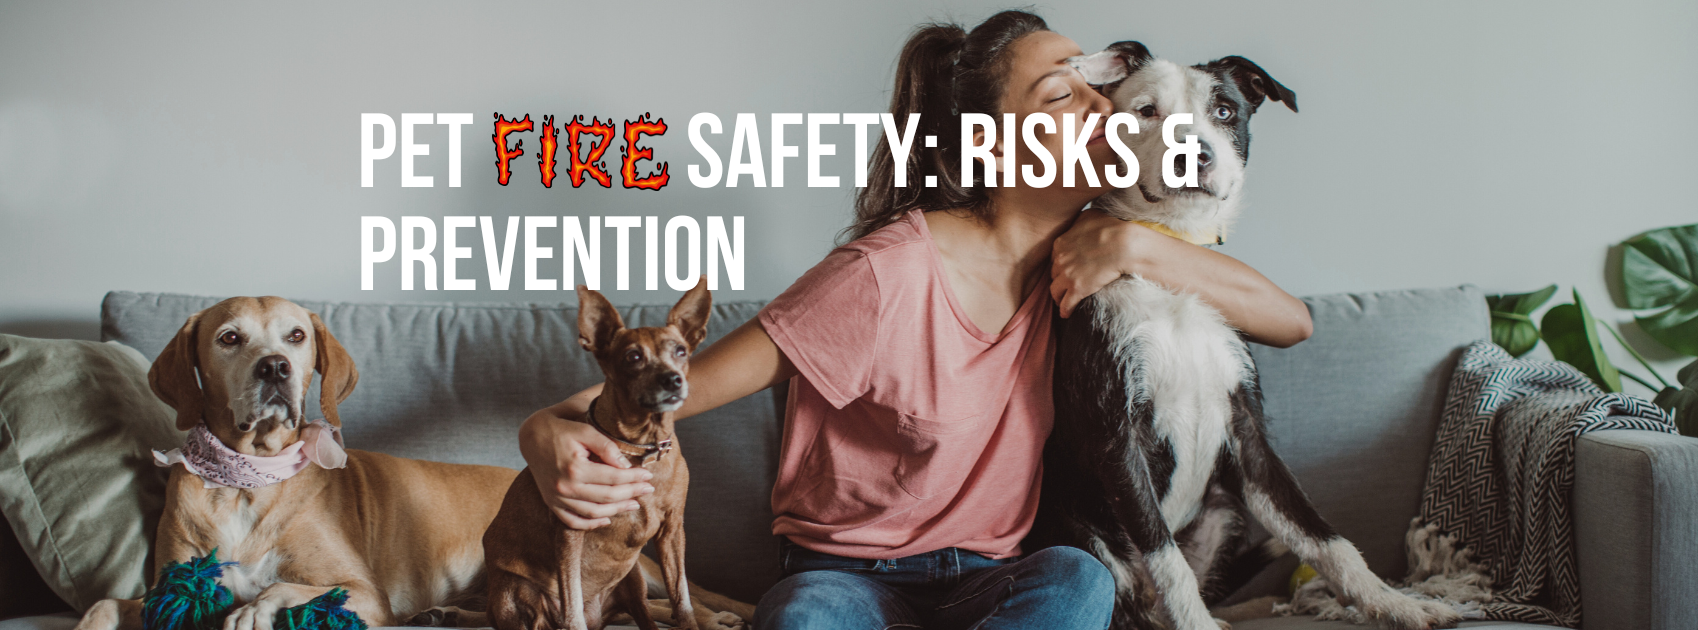 Pet Fire Safety: Risks & Prevention